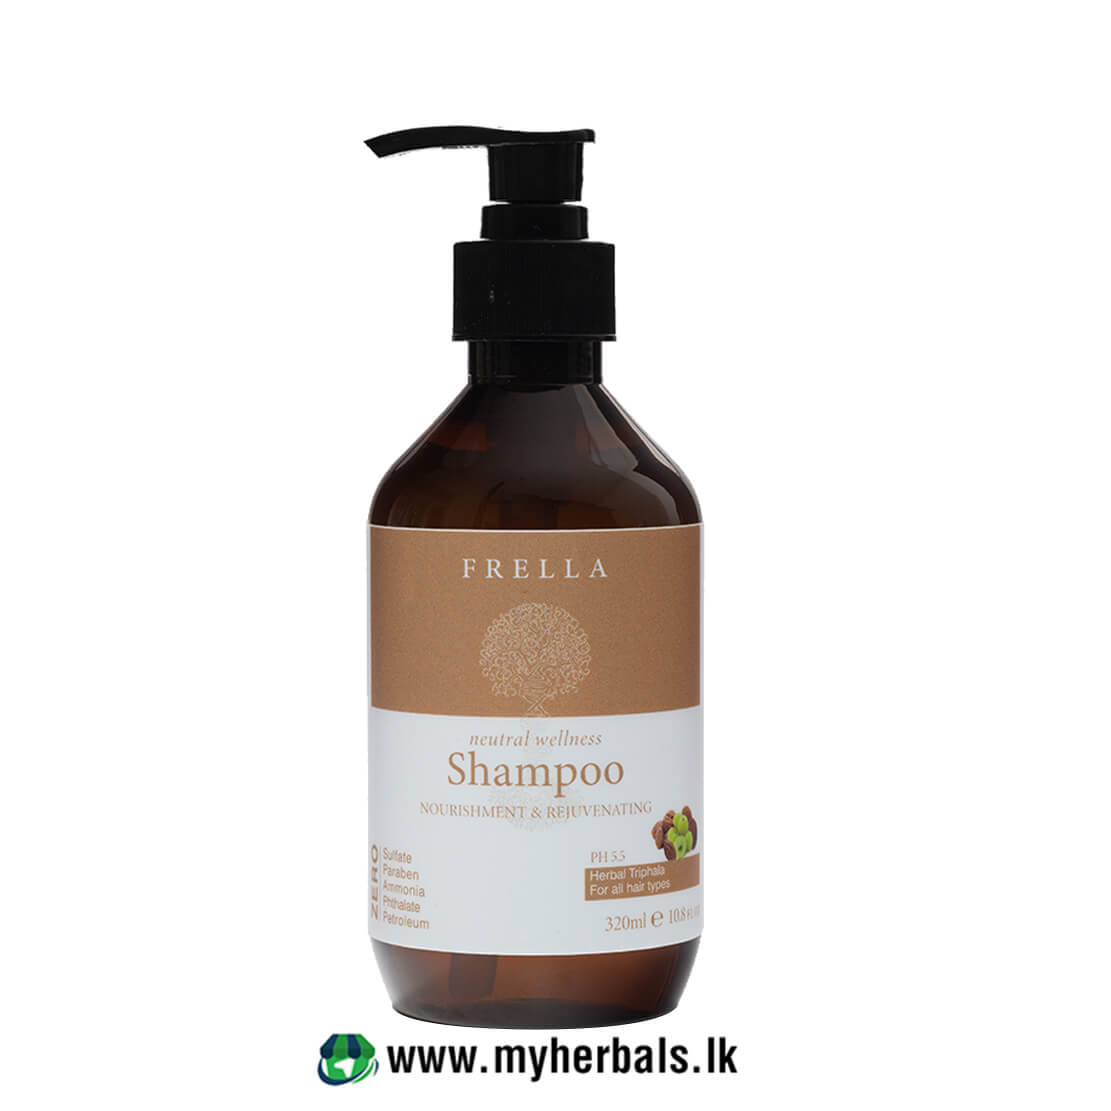 Frella Sulfate Free Shampoo with Triphala Herbal Oil 320ml